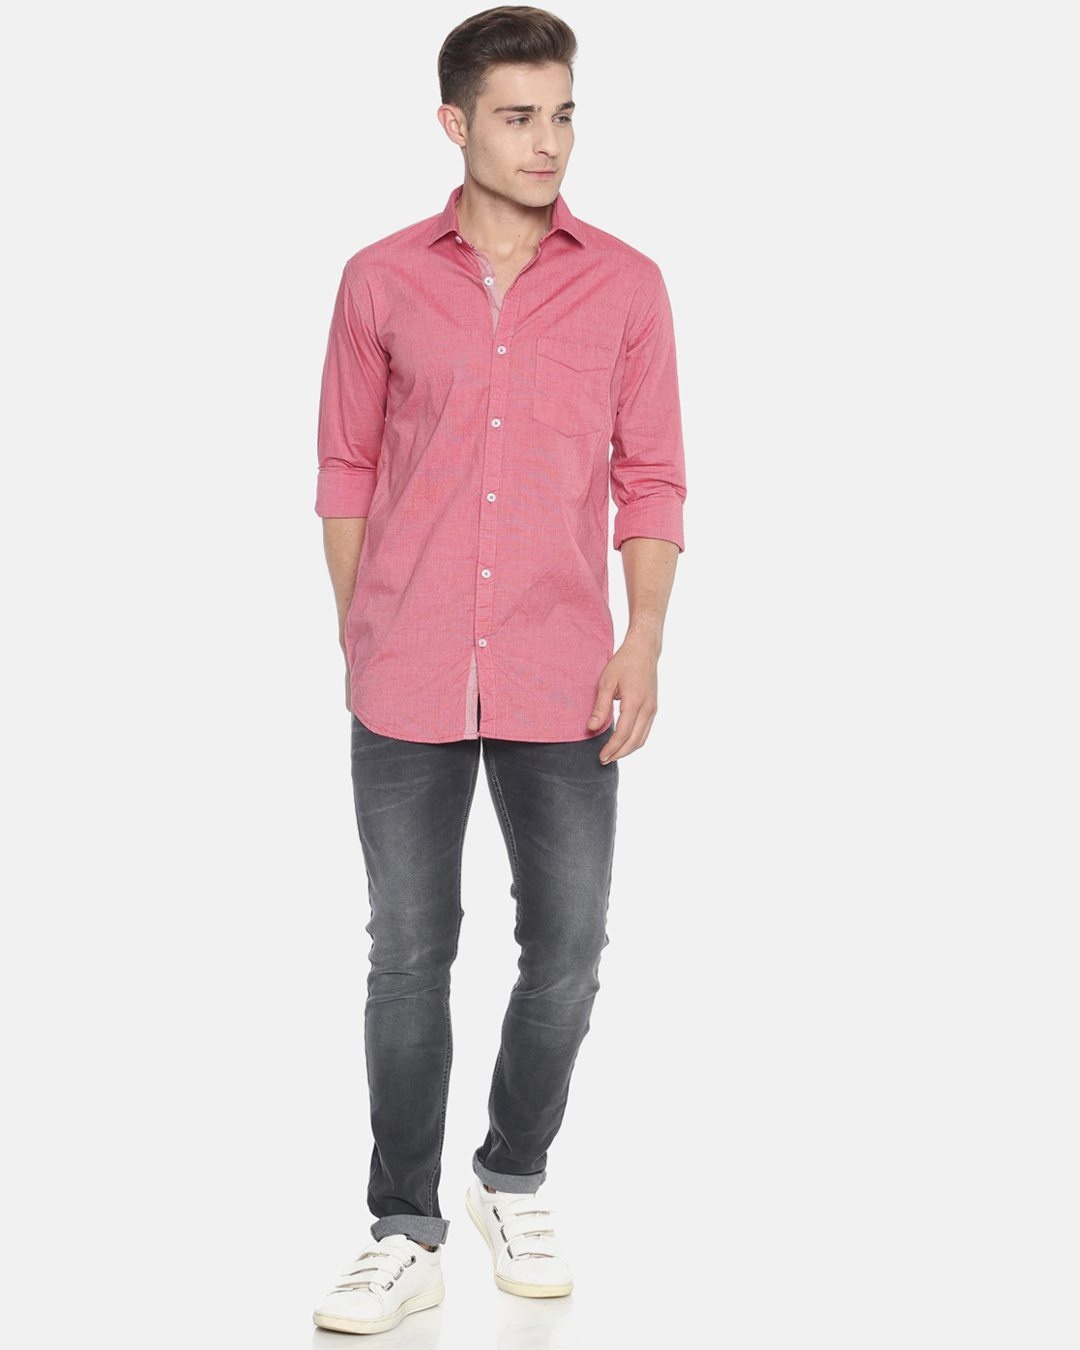 Shop Men's Solid Full Sleeve Stylish Casual Shirt